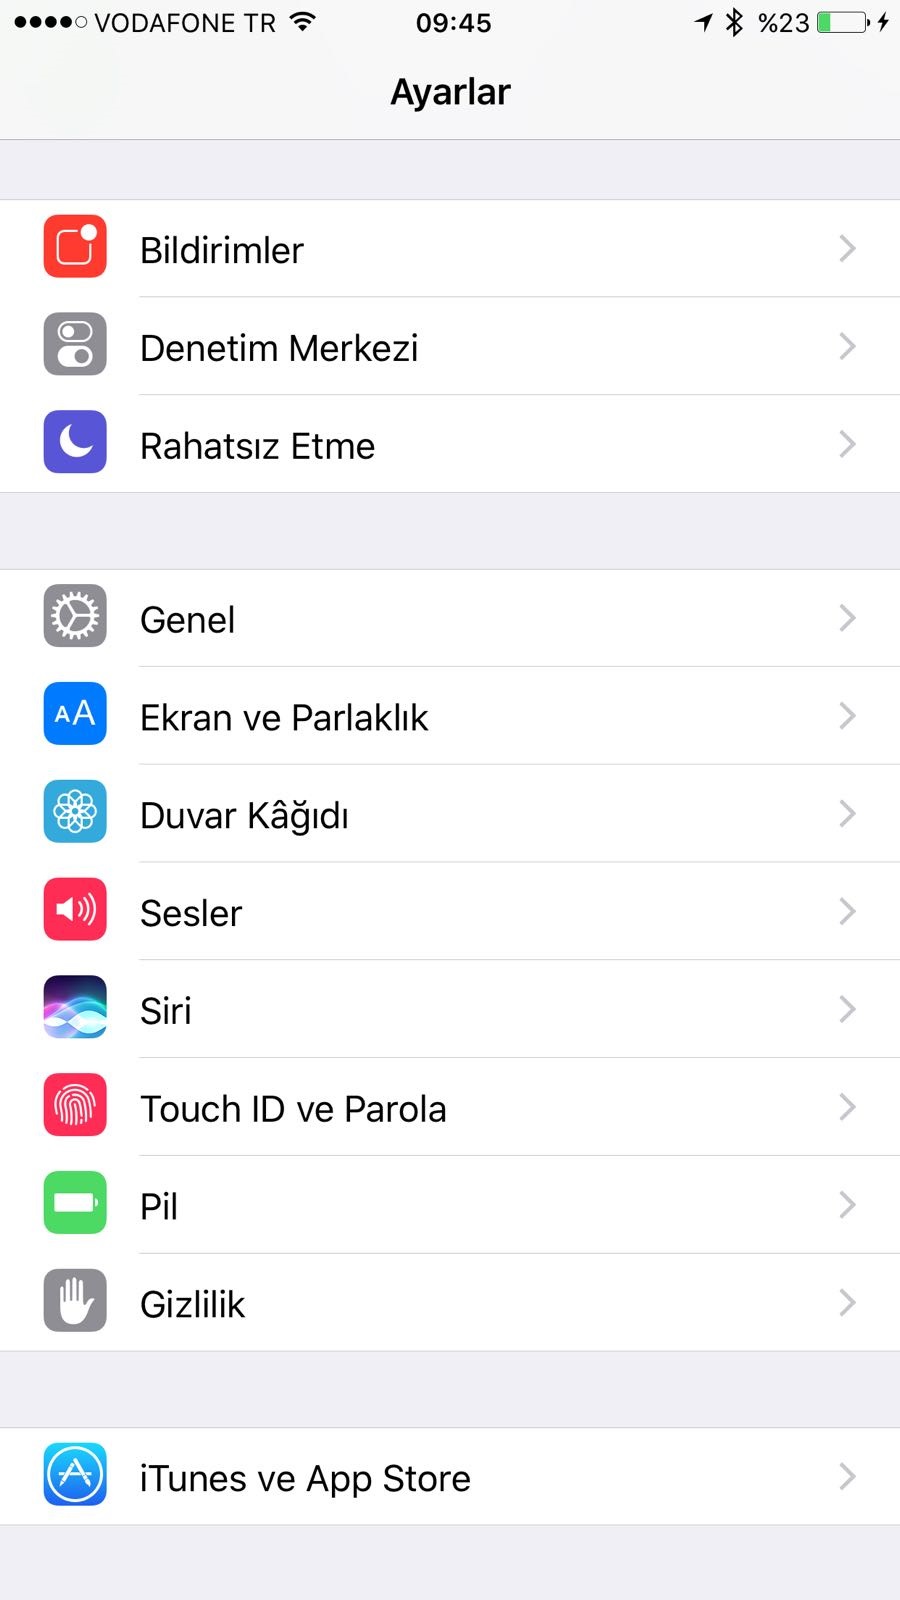 21 yorum - “iOS 11.1.2 yayınlandı!”